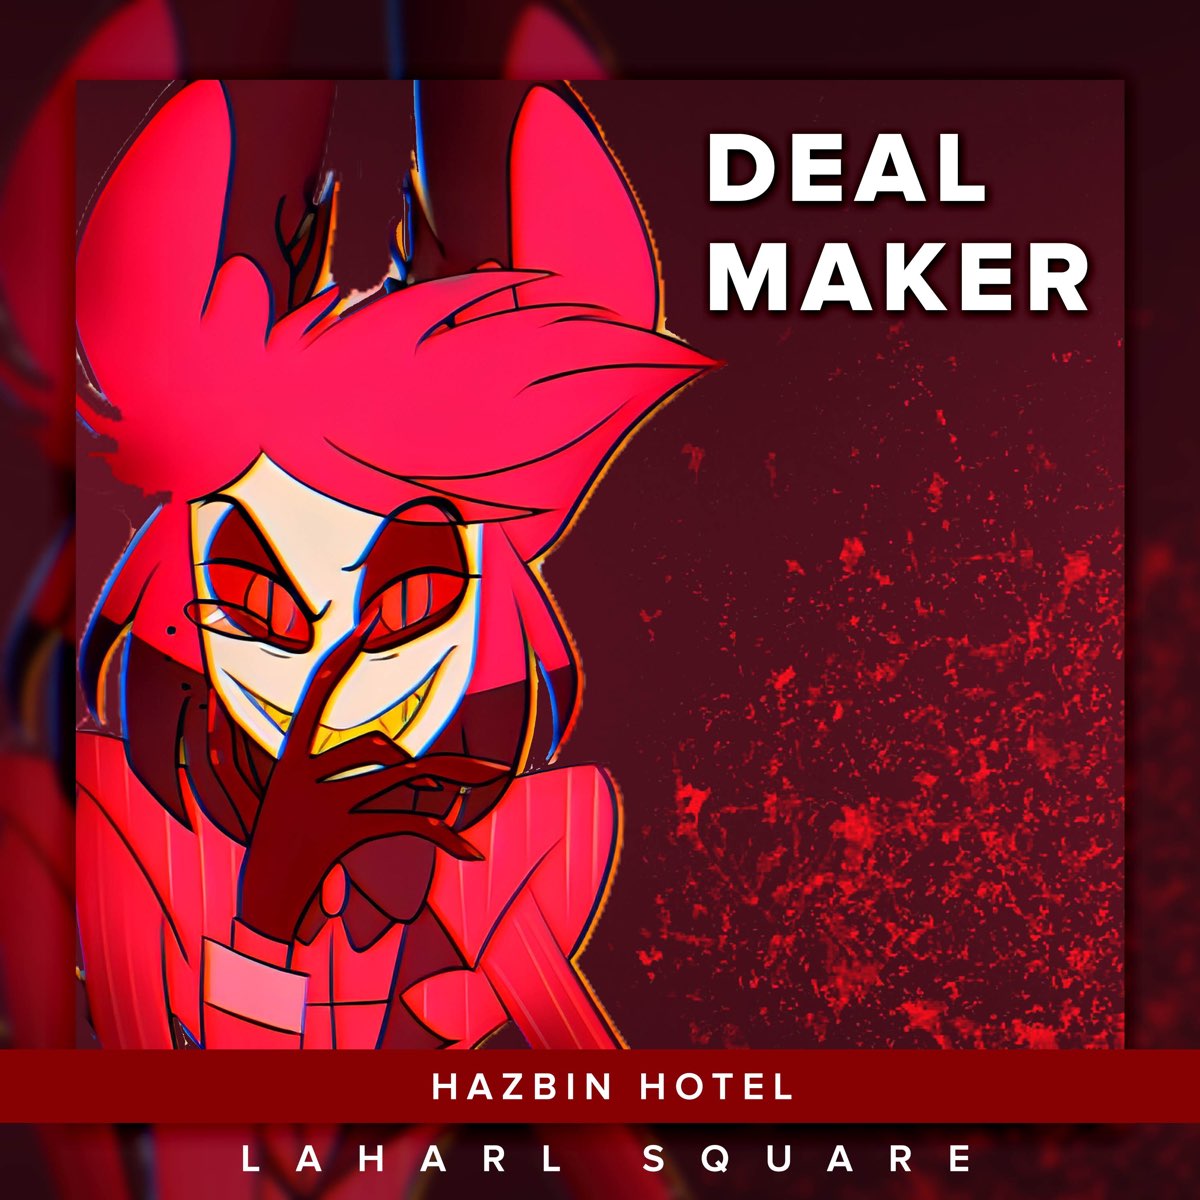 Deal maker